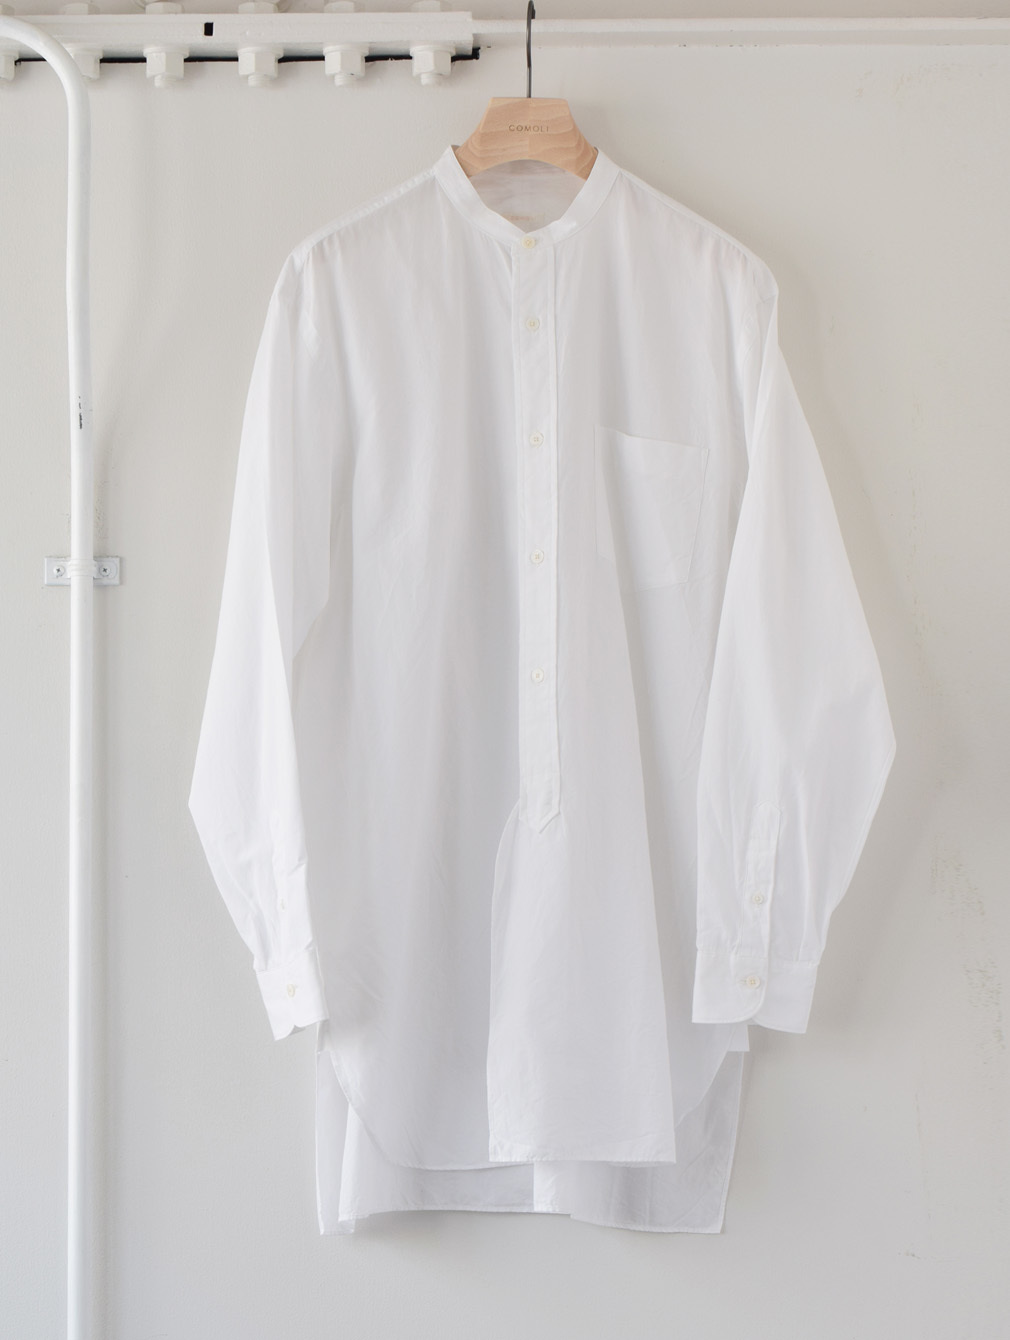 comoli コモリ バンドカラーシャツ 白 ホワイト  1